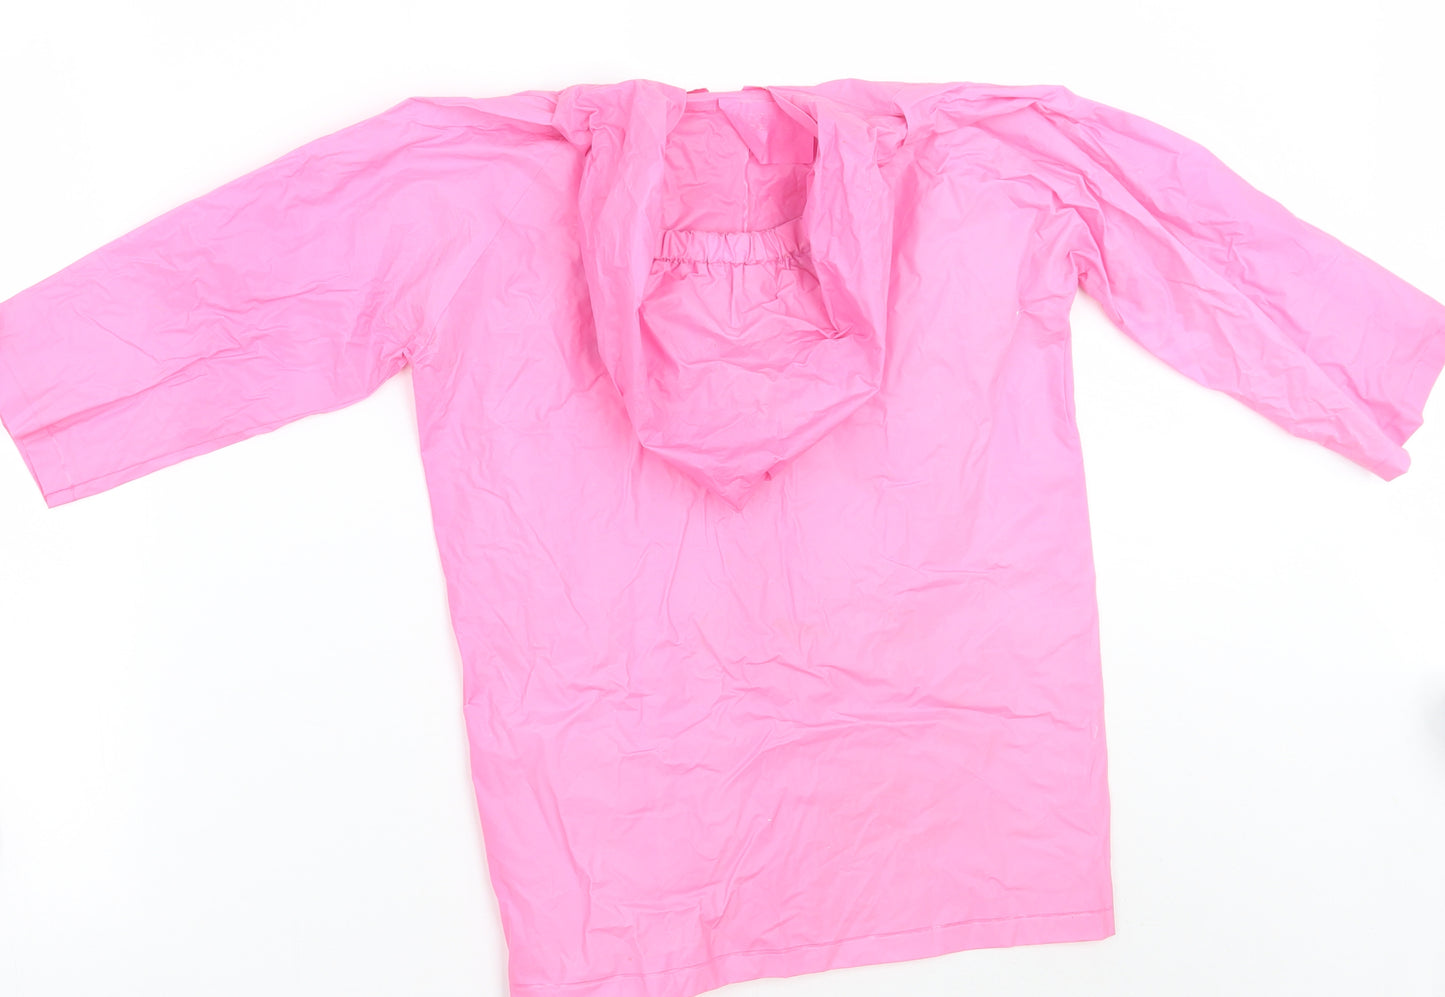 Preworn Girls Pink Floral  Jacket Coat Size M